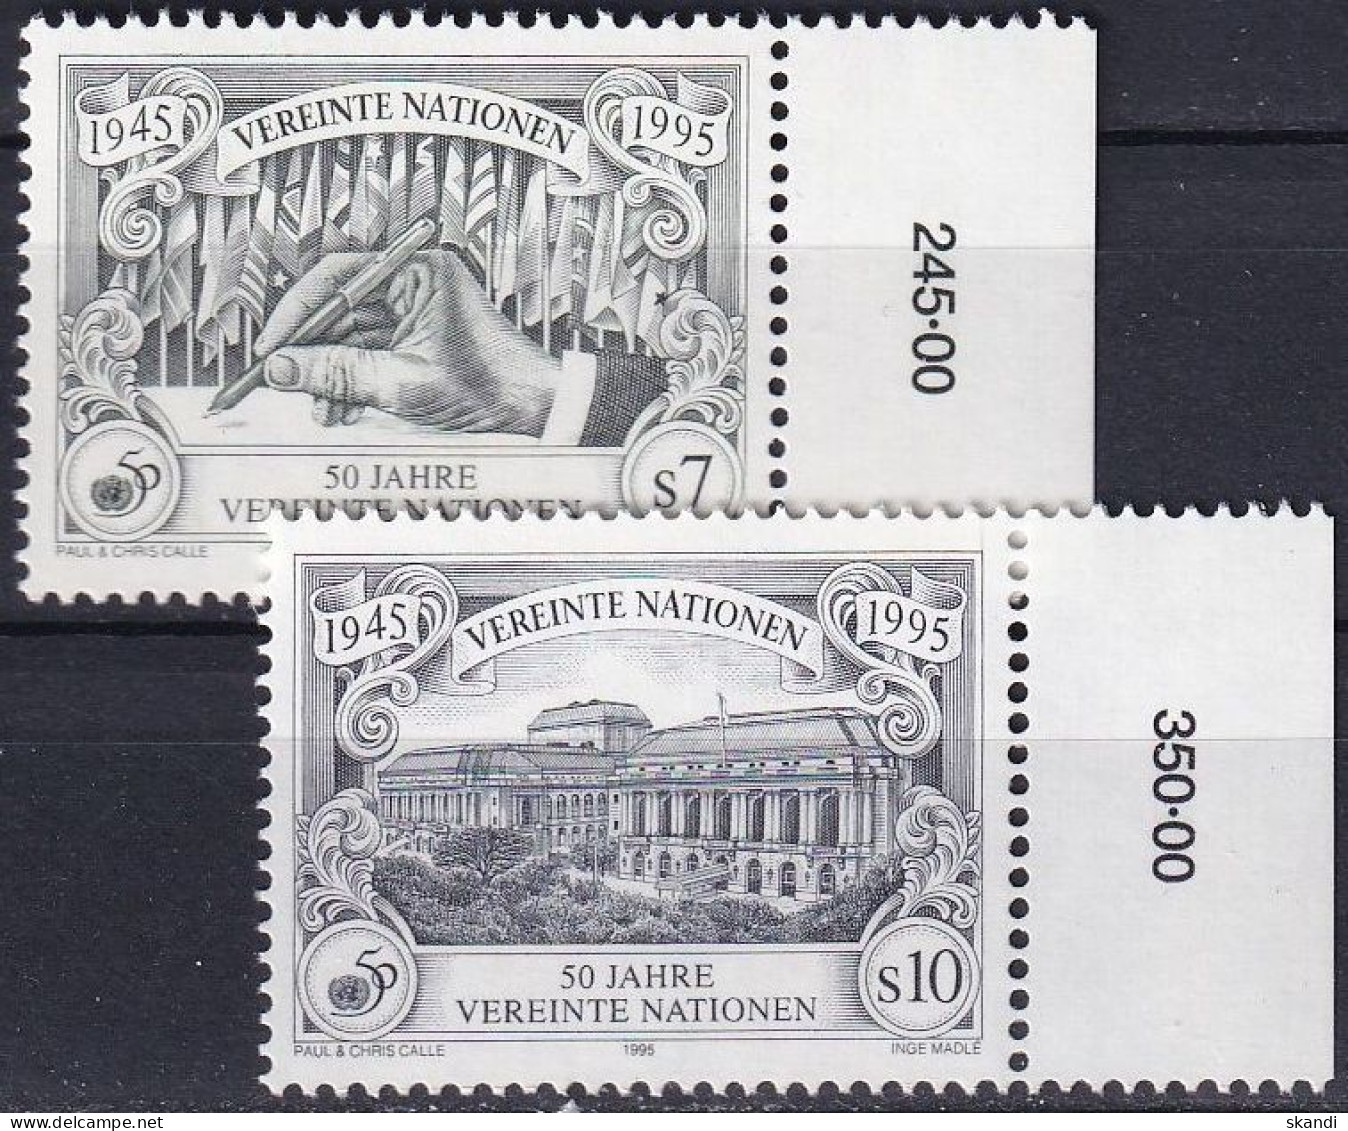 UNO WIEN 1995 Mi-Nr. 186/87 A ** MNH - Unused Stamps